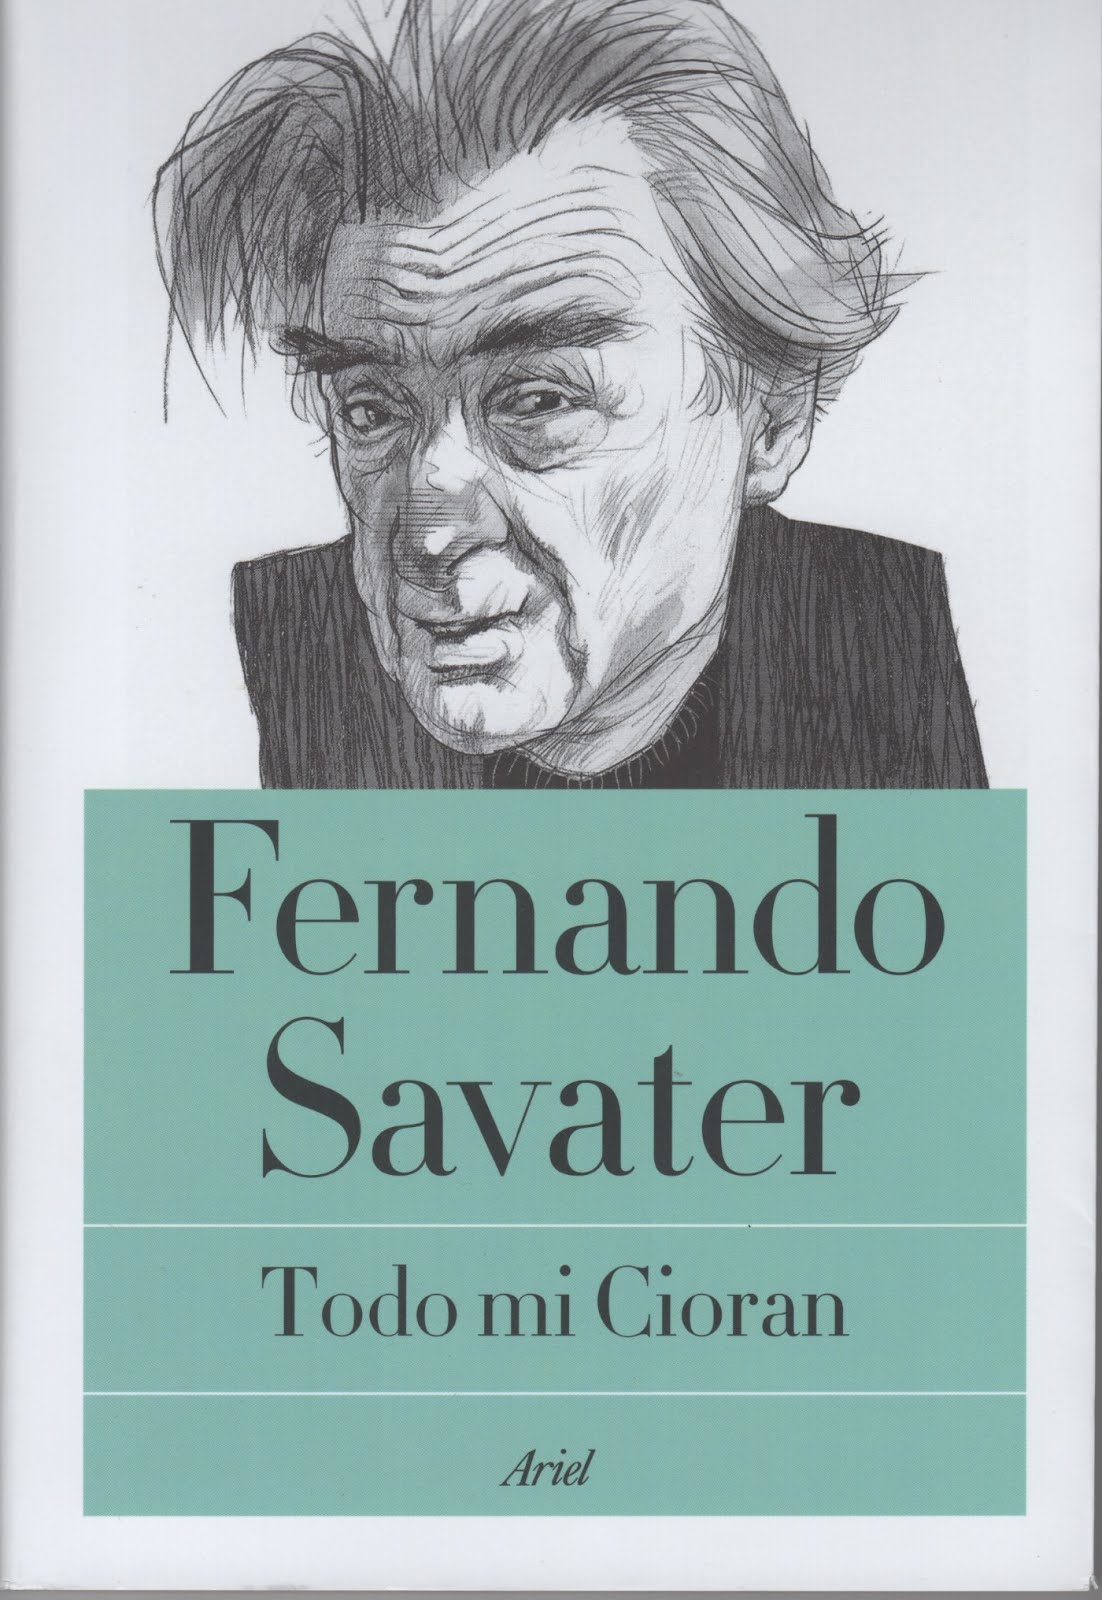 Fernando Savater (Todo mi Cioran)